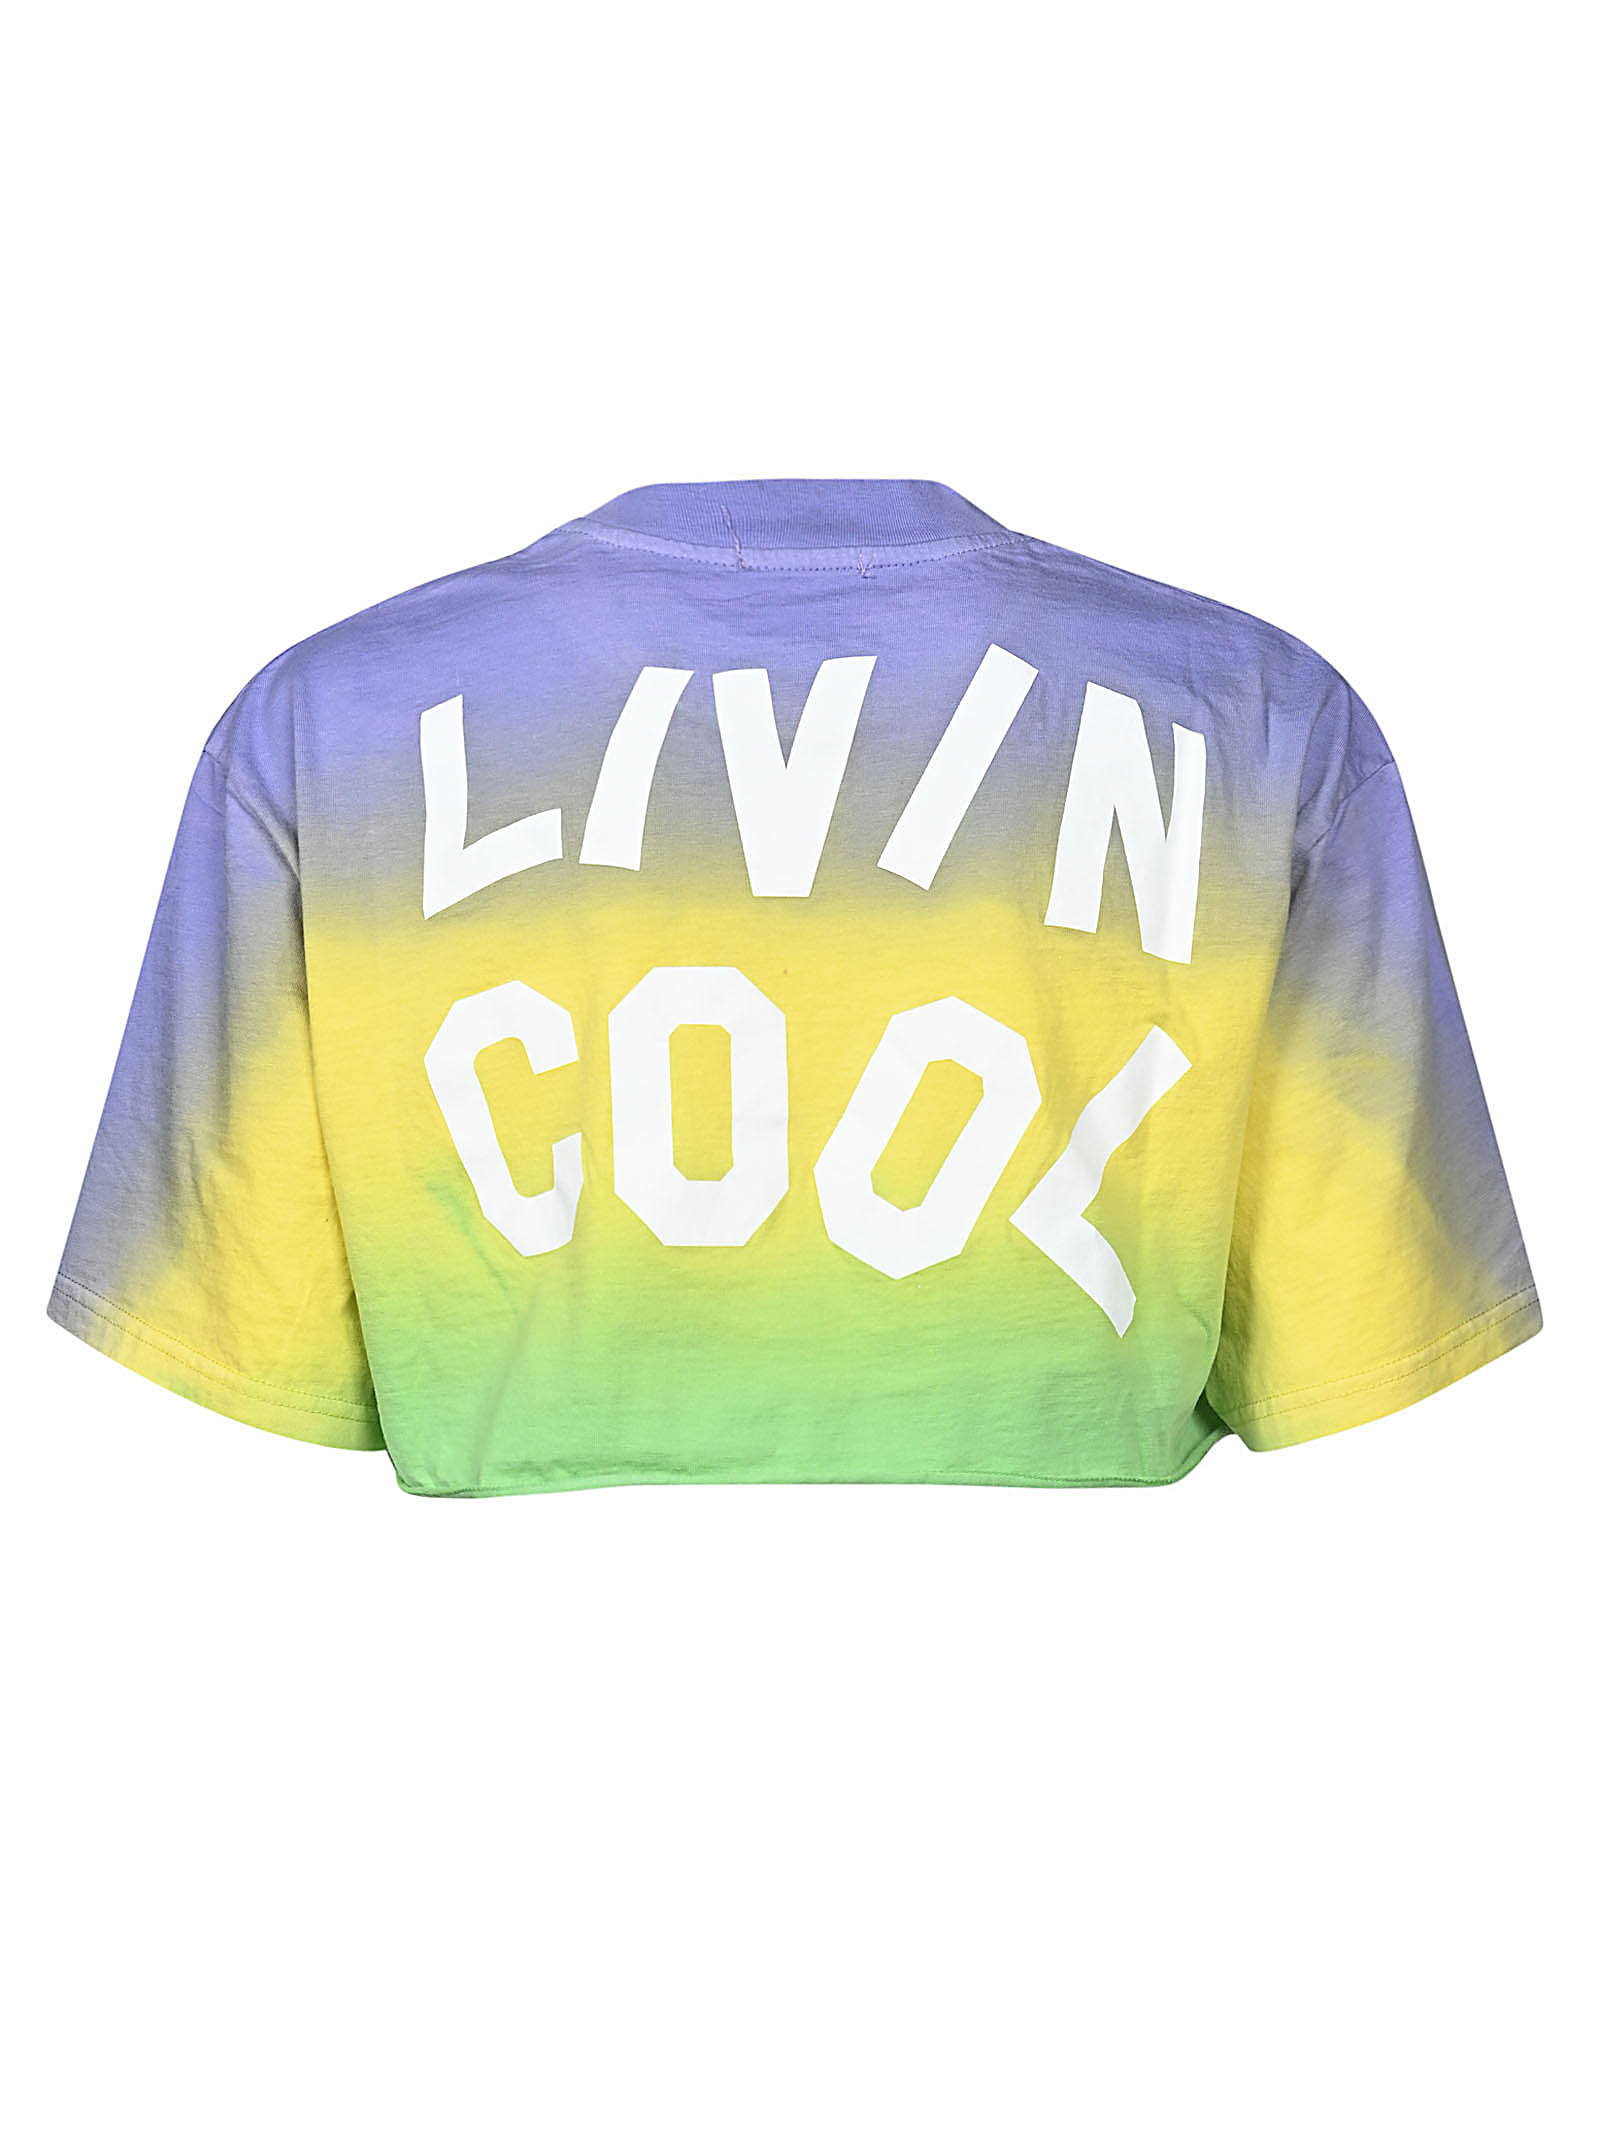 Livincool LIVINCOOL- Cotton Oversized Crop Logo T-shirt